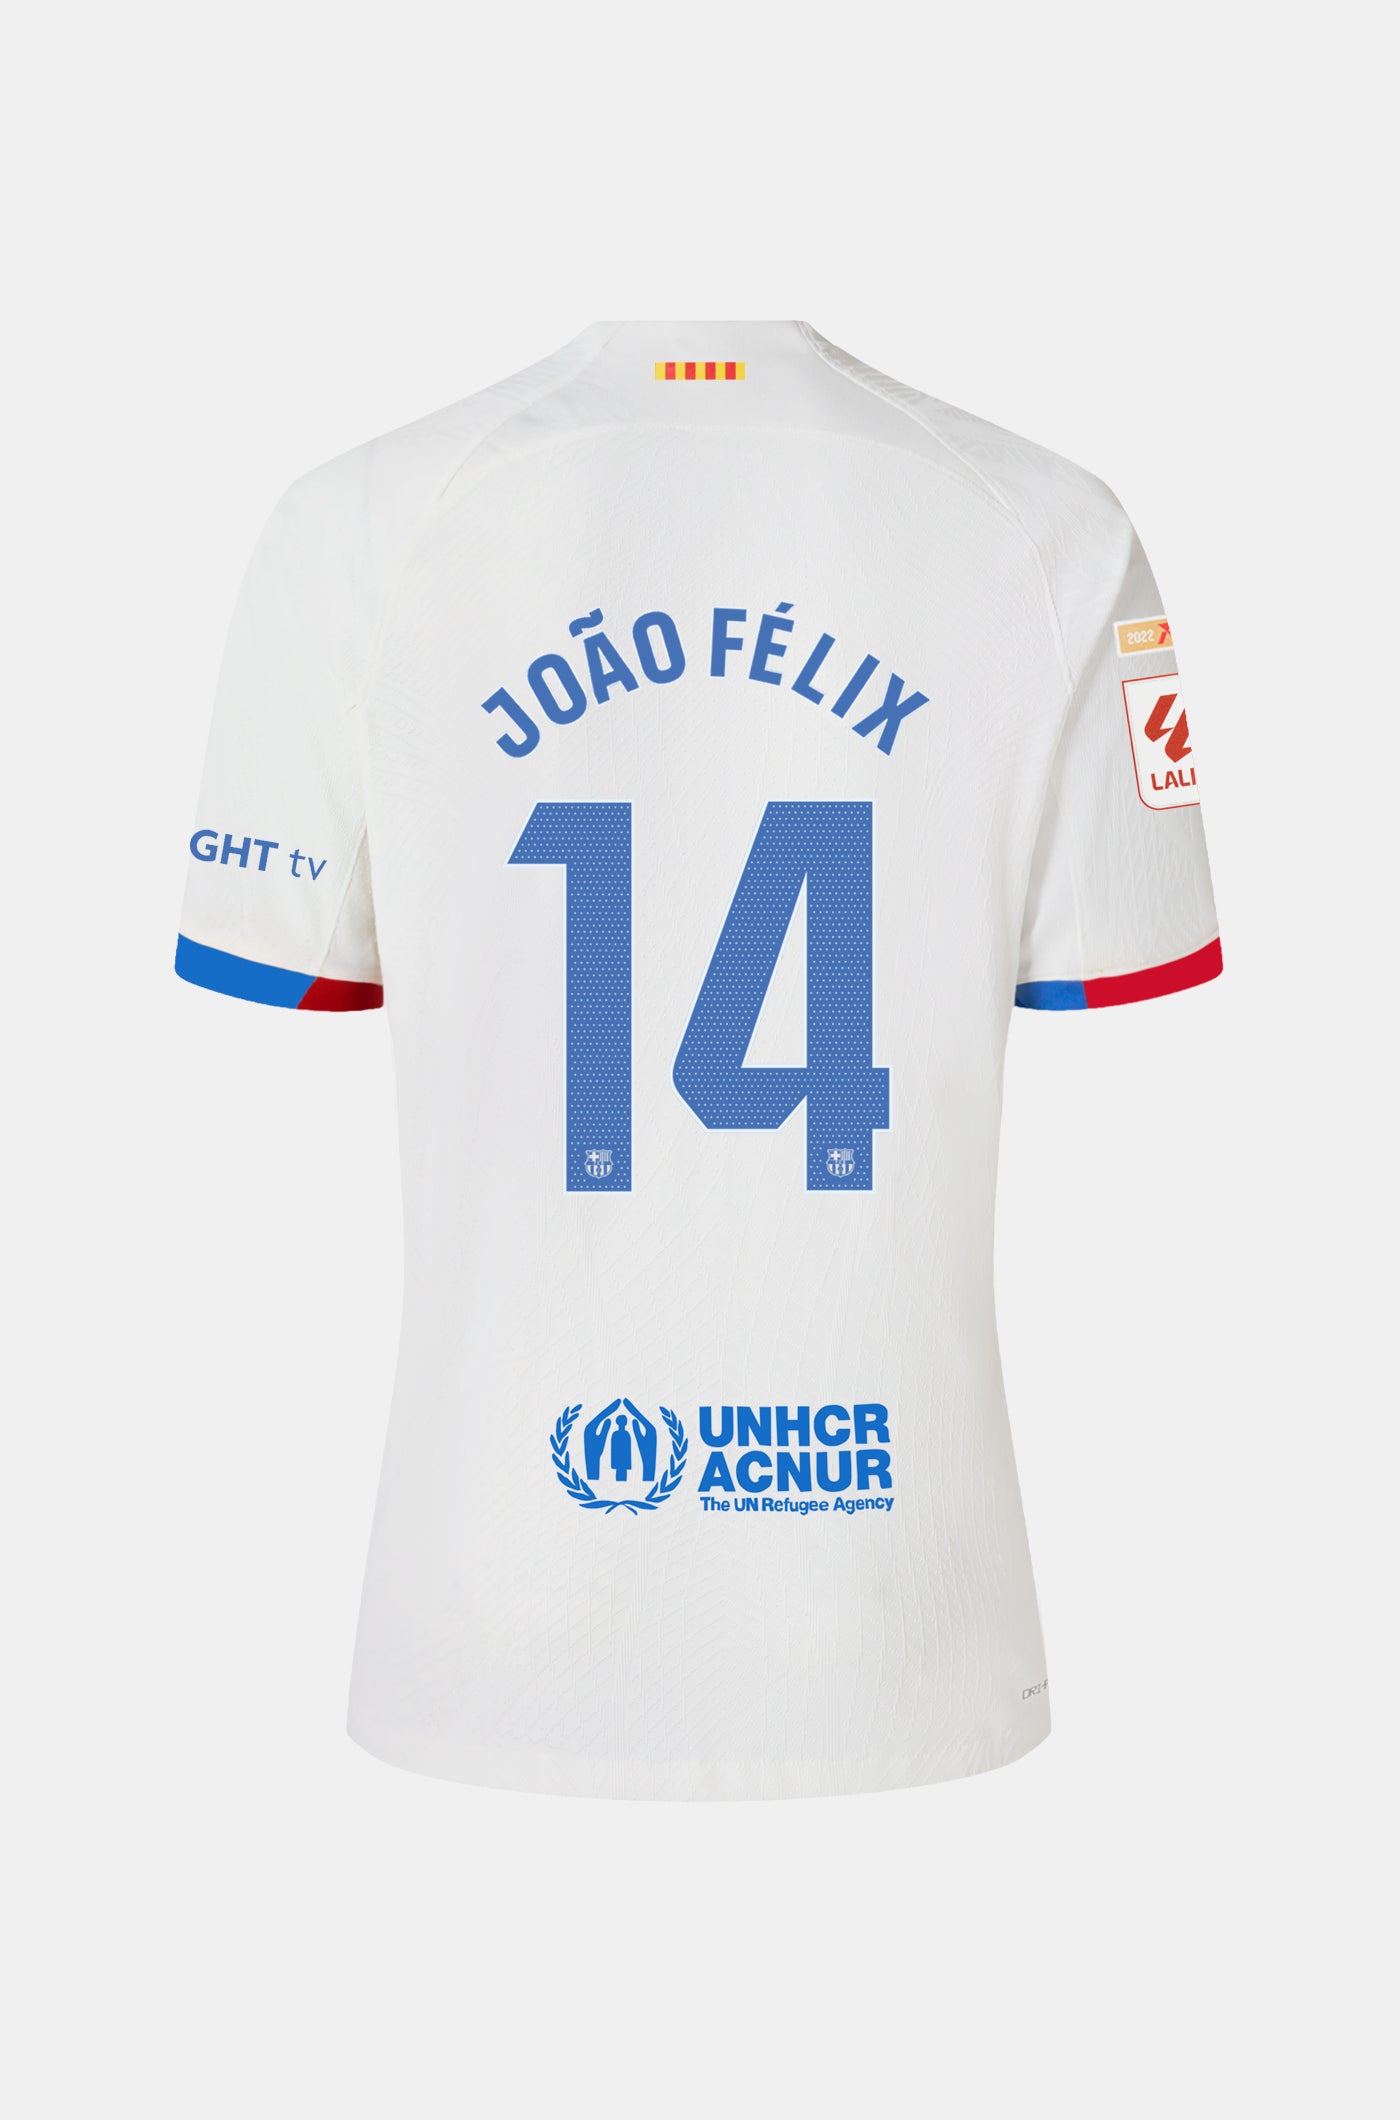 LFP FC Barcelona away shirt 23/24 Player’s Edition  - JOÃO FÉLIX